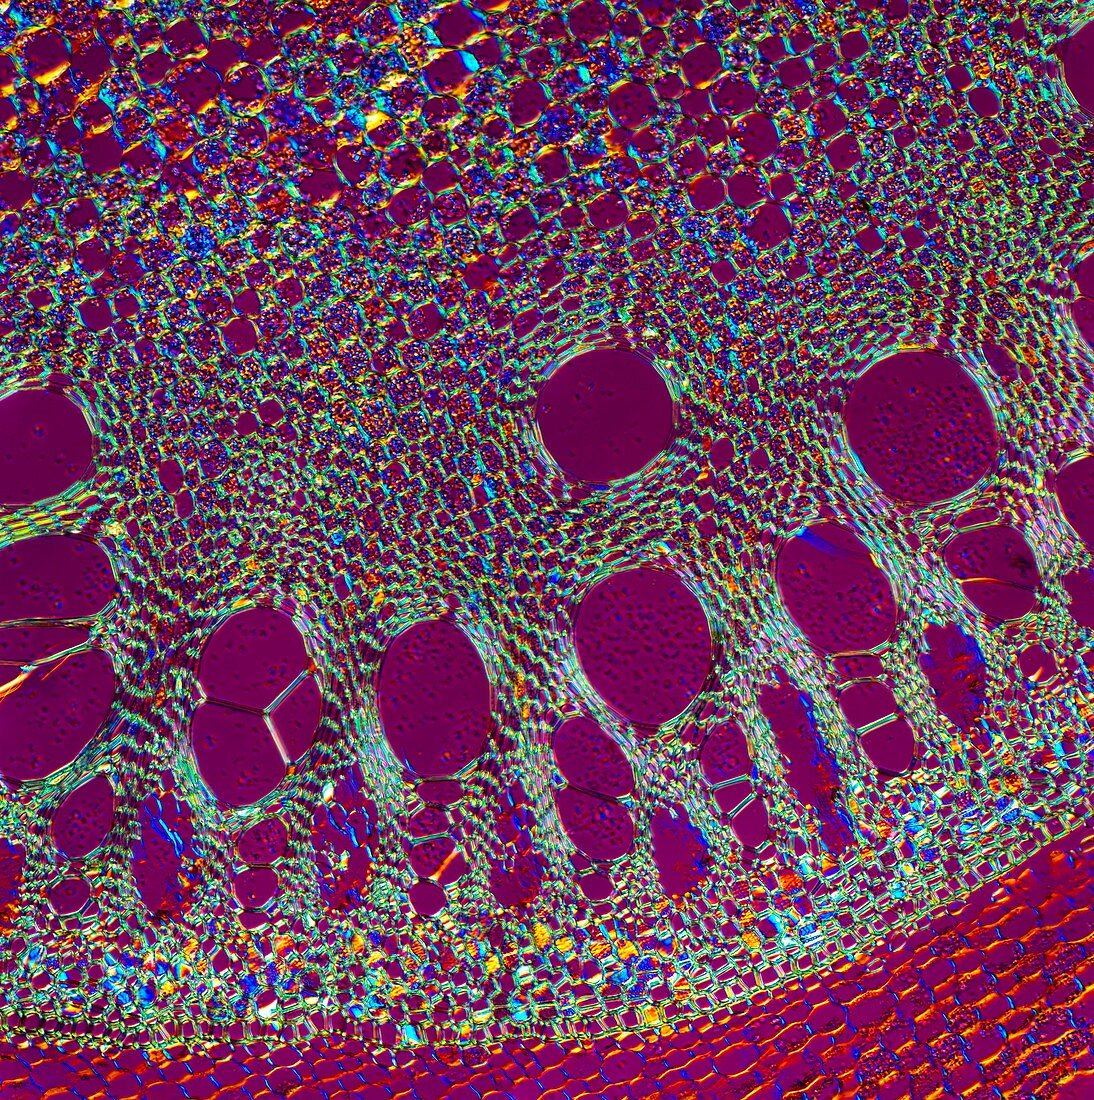 Sarsaparilla plant stem,light micrograph